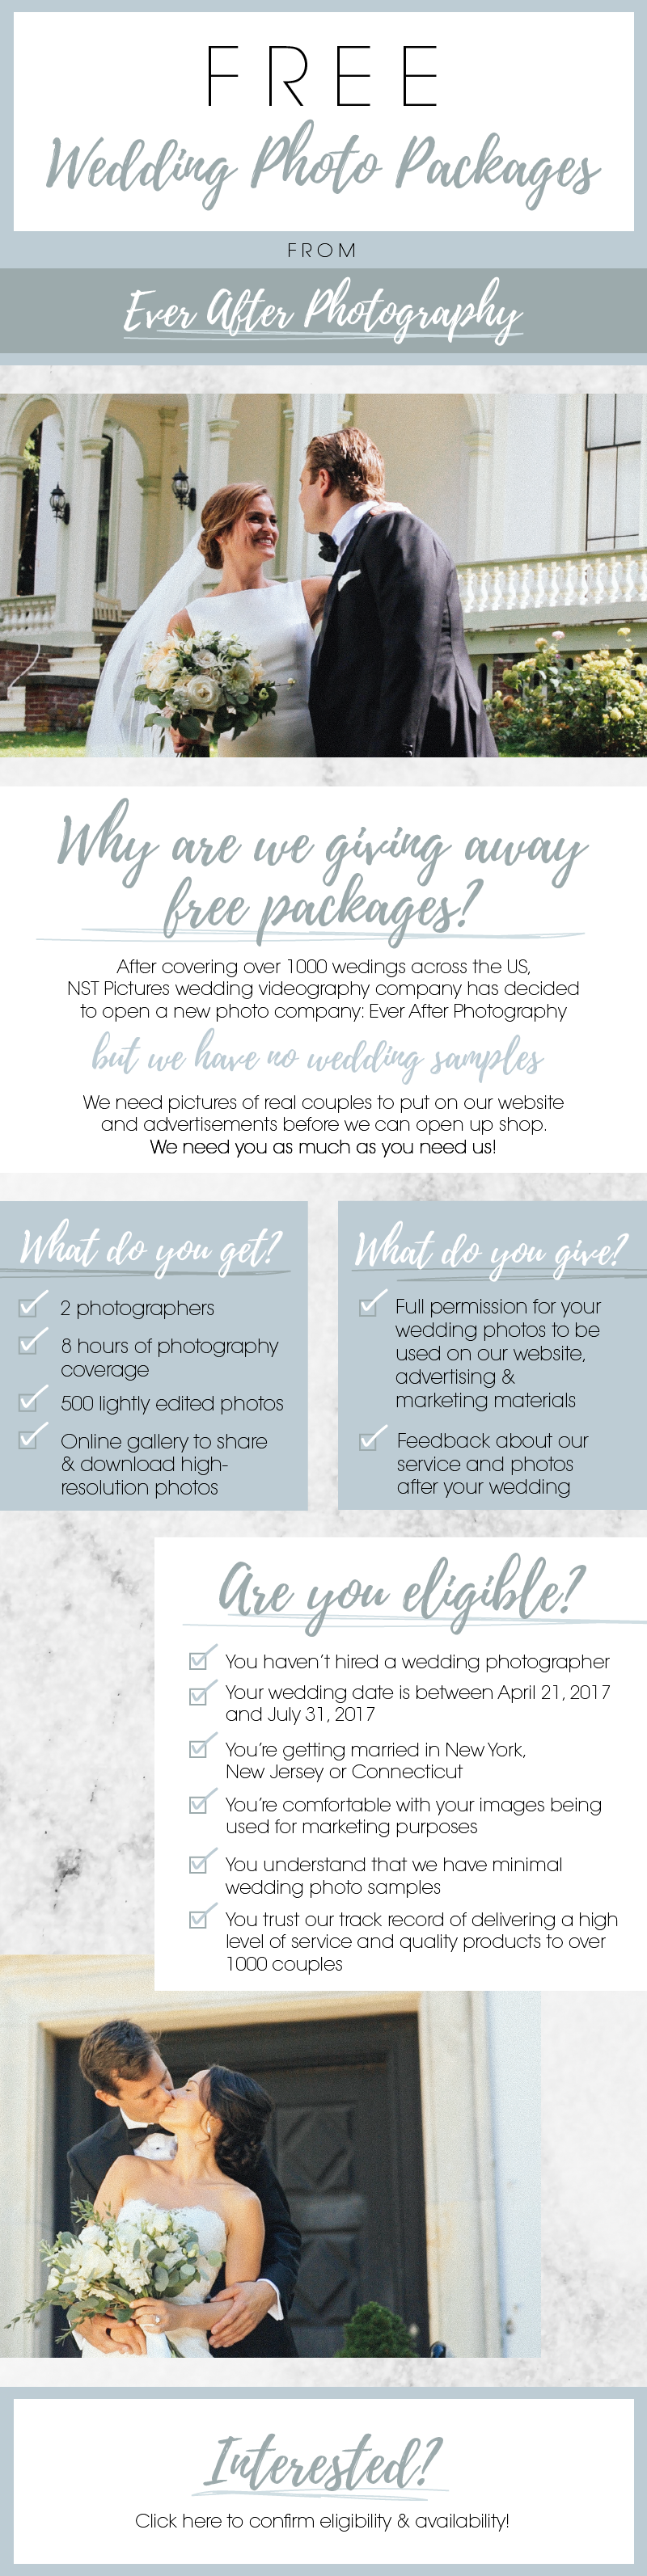 Free Wedding Photography Details 01 - Wedding Photography